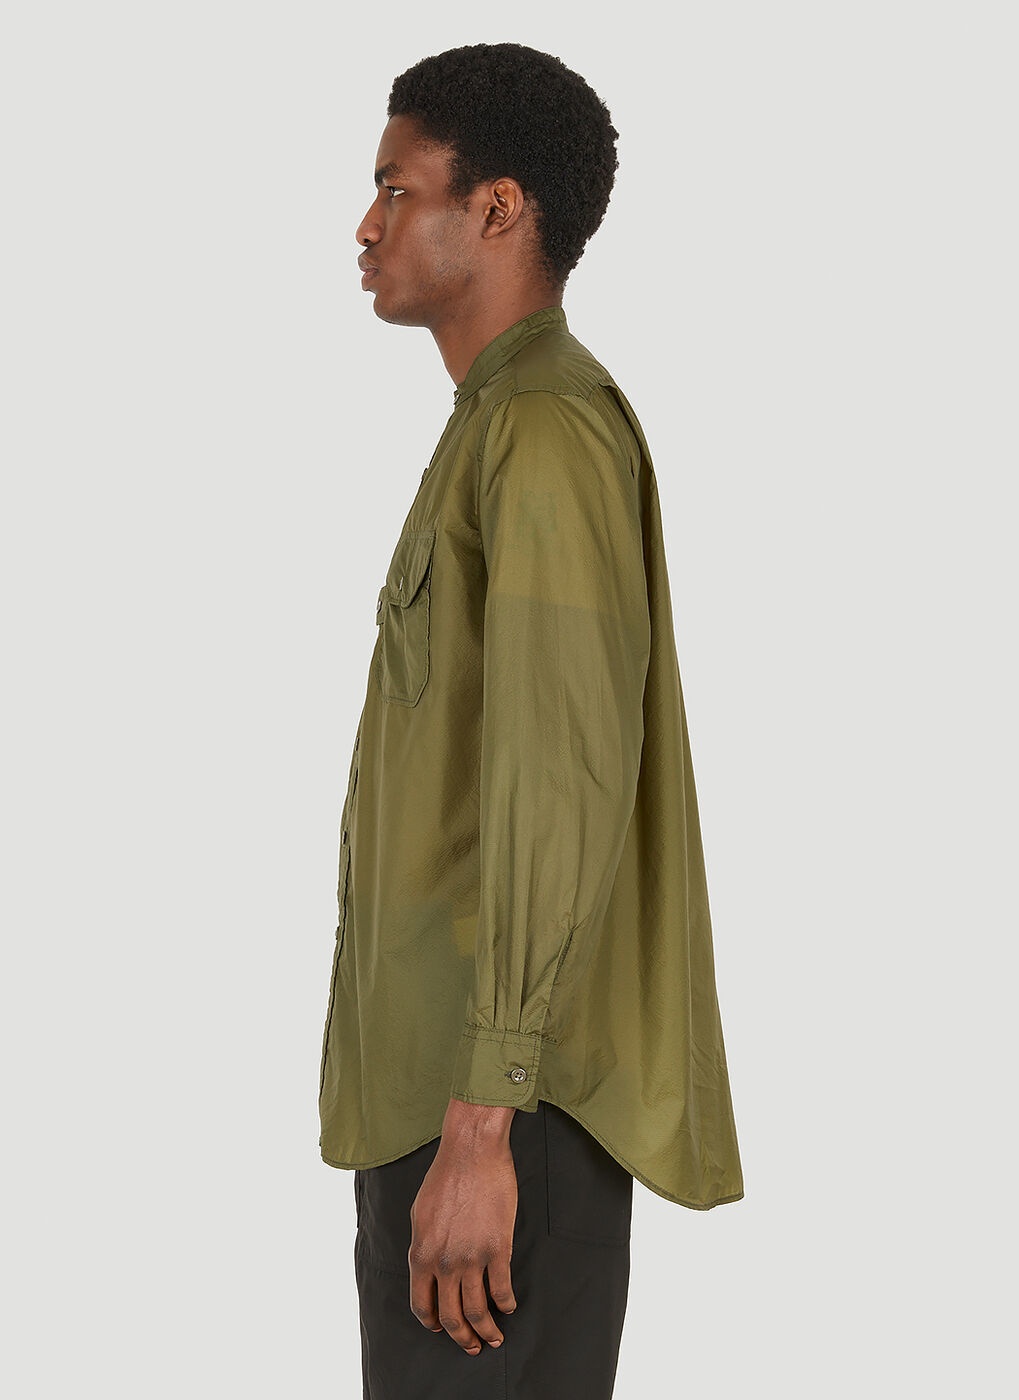 Banded Collar Shirt in Khaki Engineered Garments